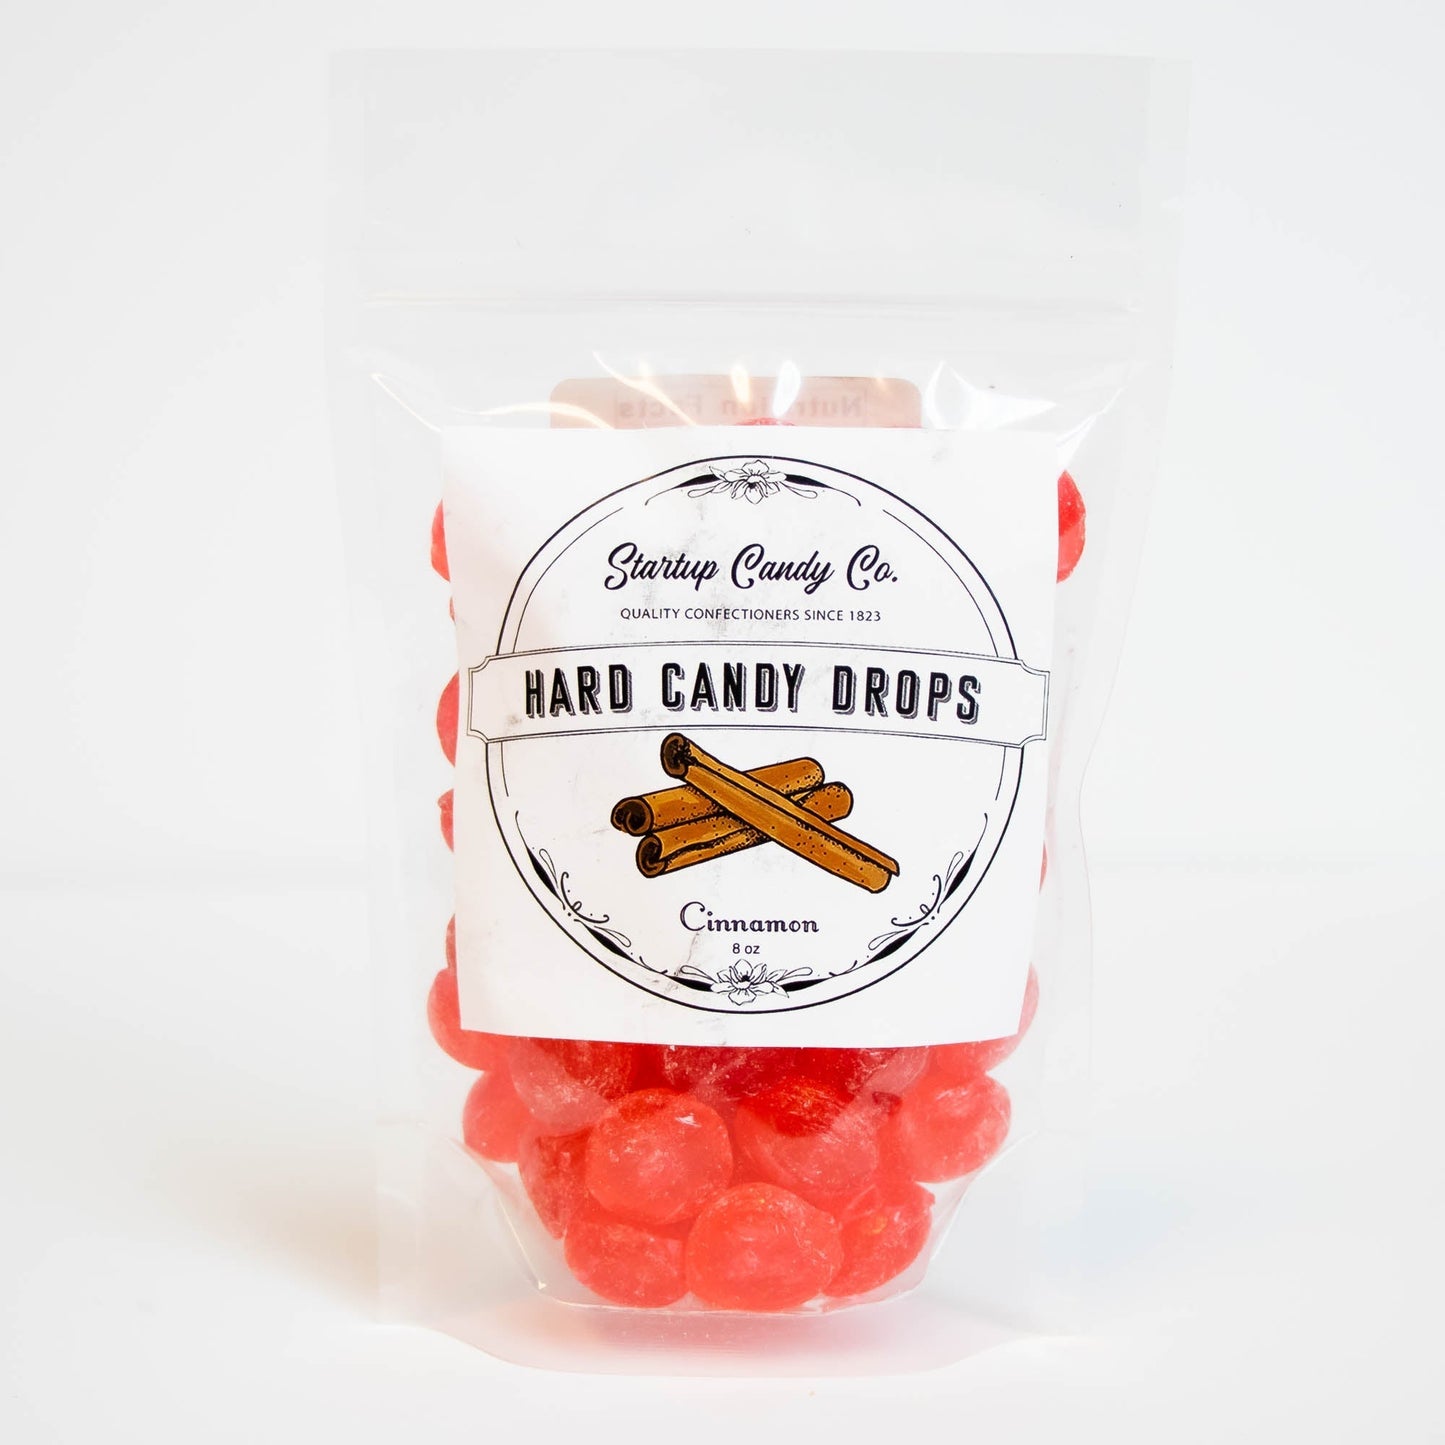 Hard Candy Drops in Big Lick